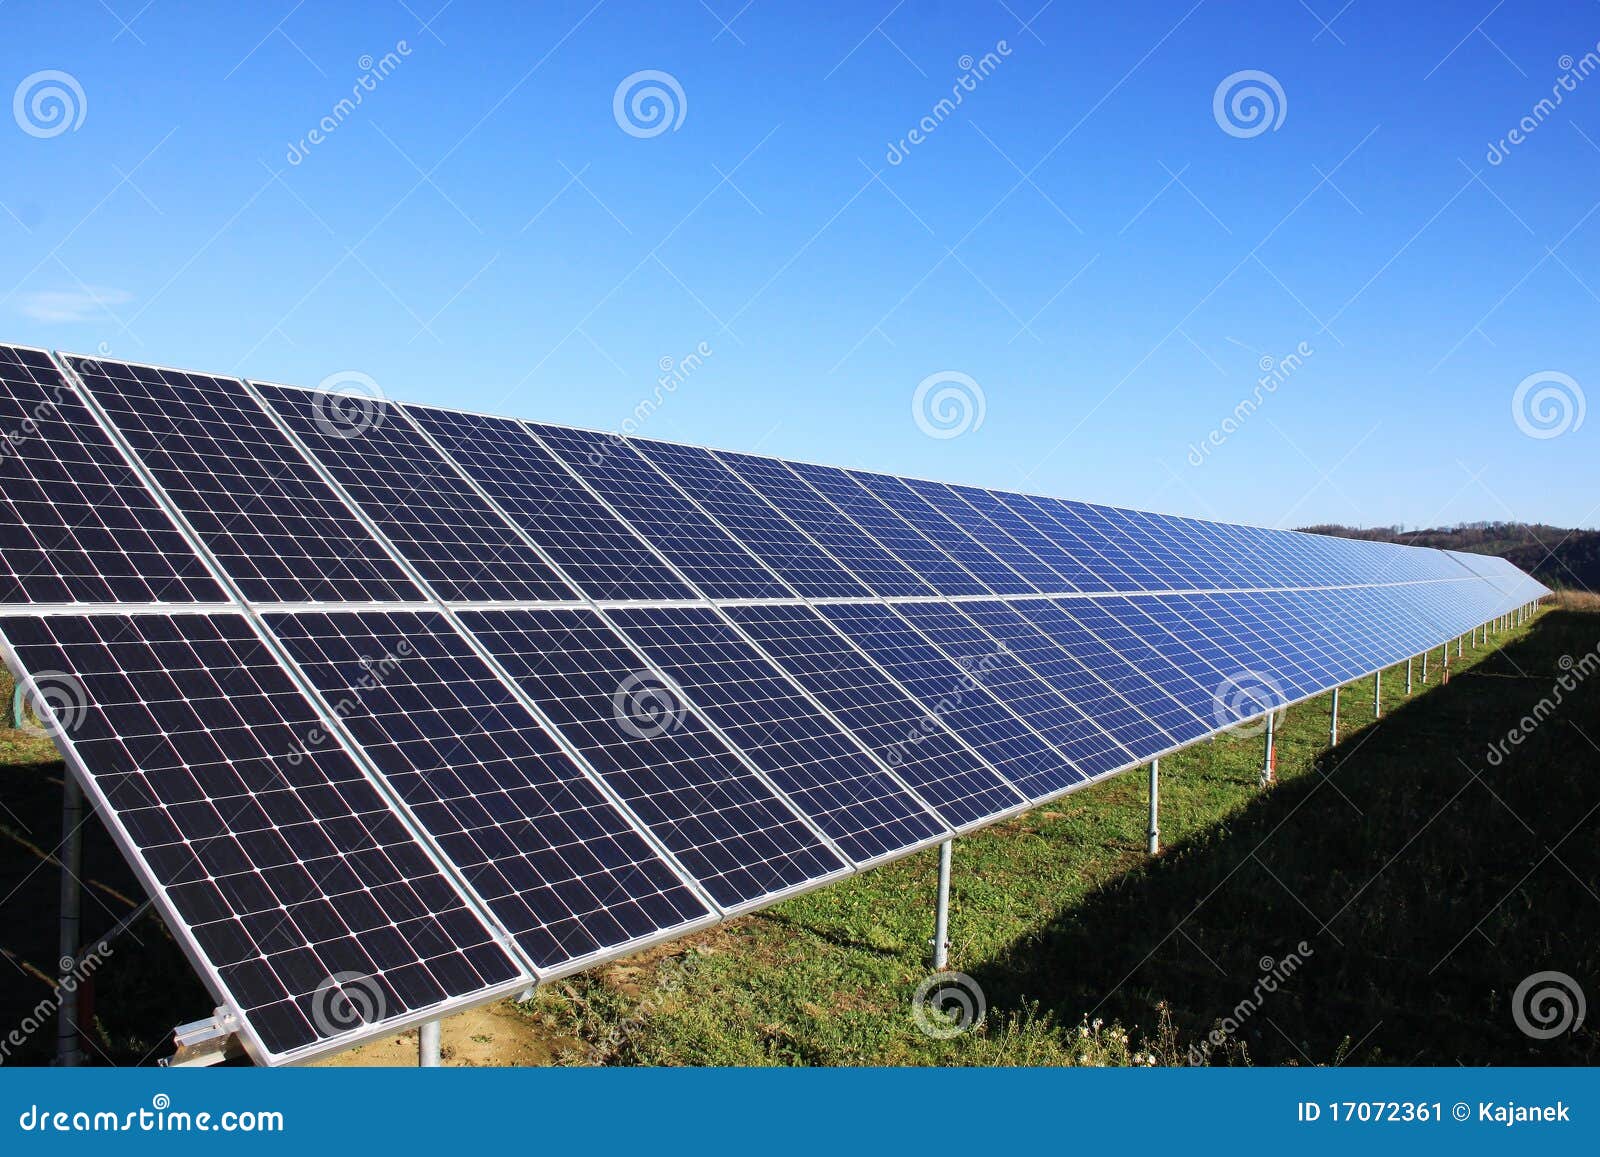 A Sample Solar Panel Installation Business Plan Template